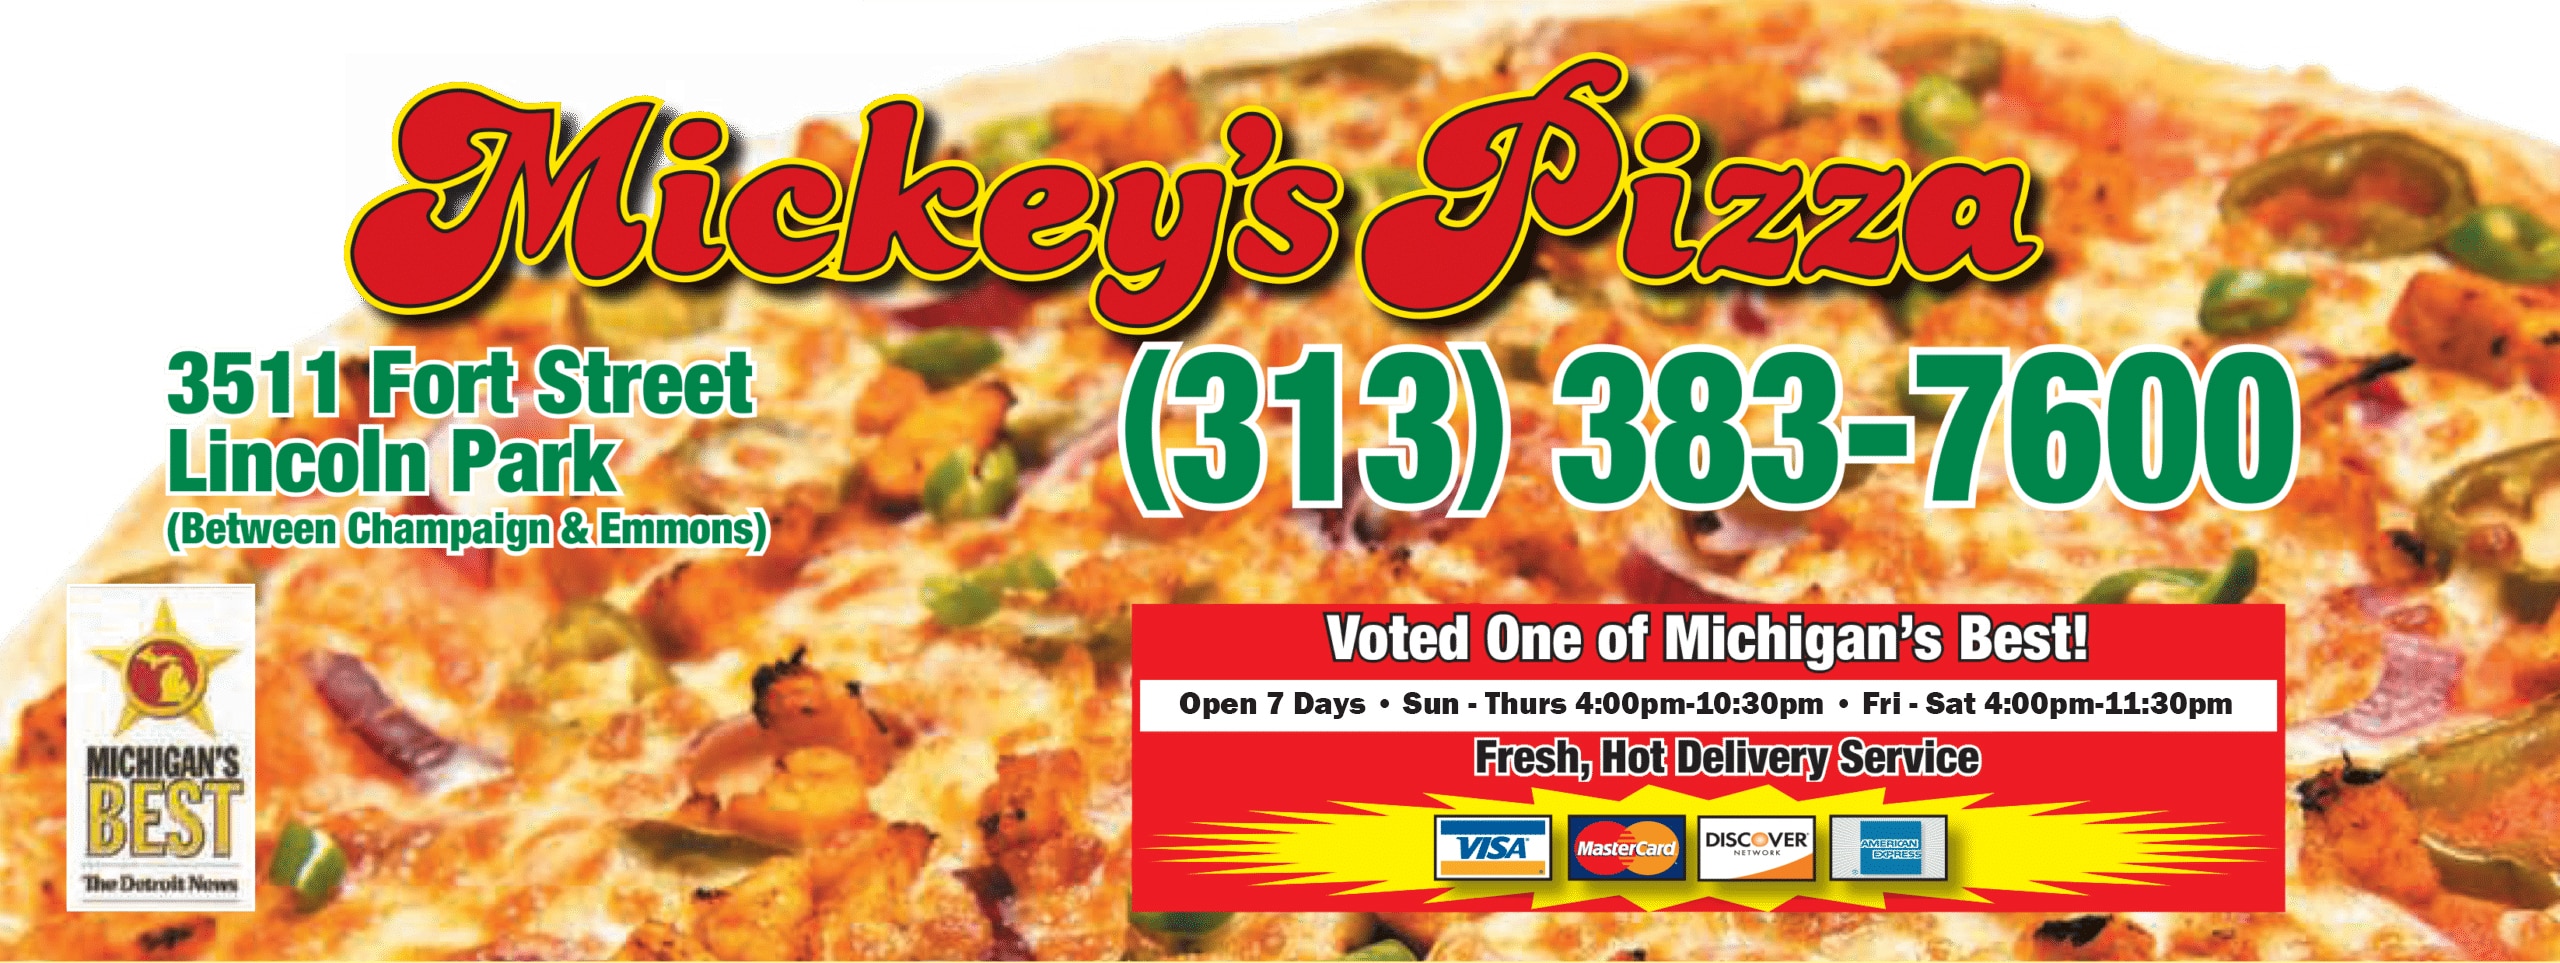 Mickeys Pizza Lincoln Park Michigan Pizza Header Updated | Mickey's Pizza